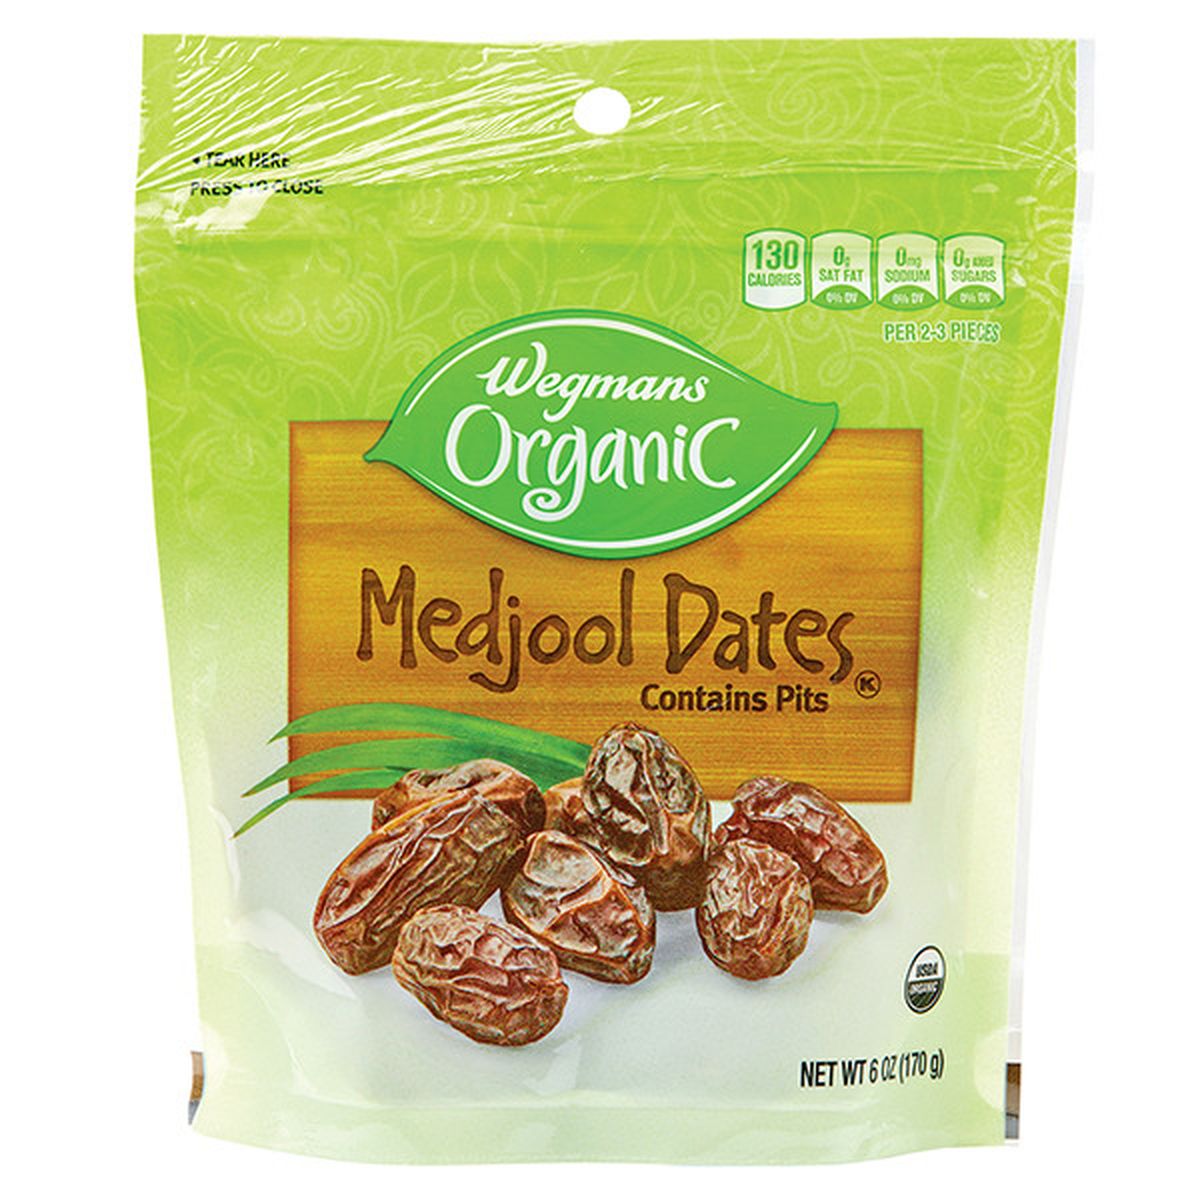 Calories in Wegmans Organic Medjool Dates